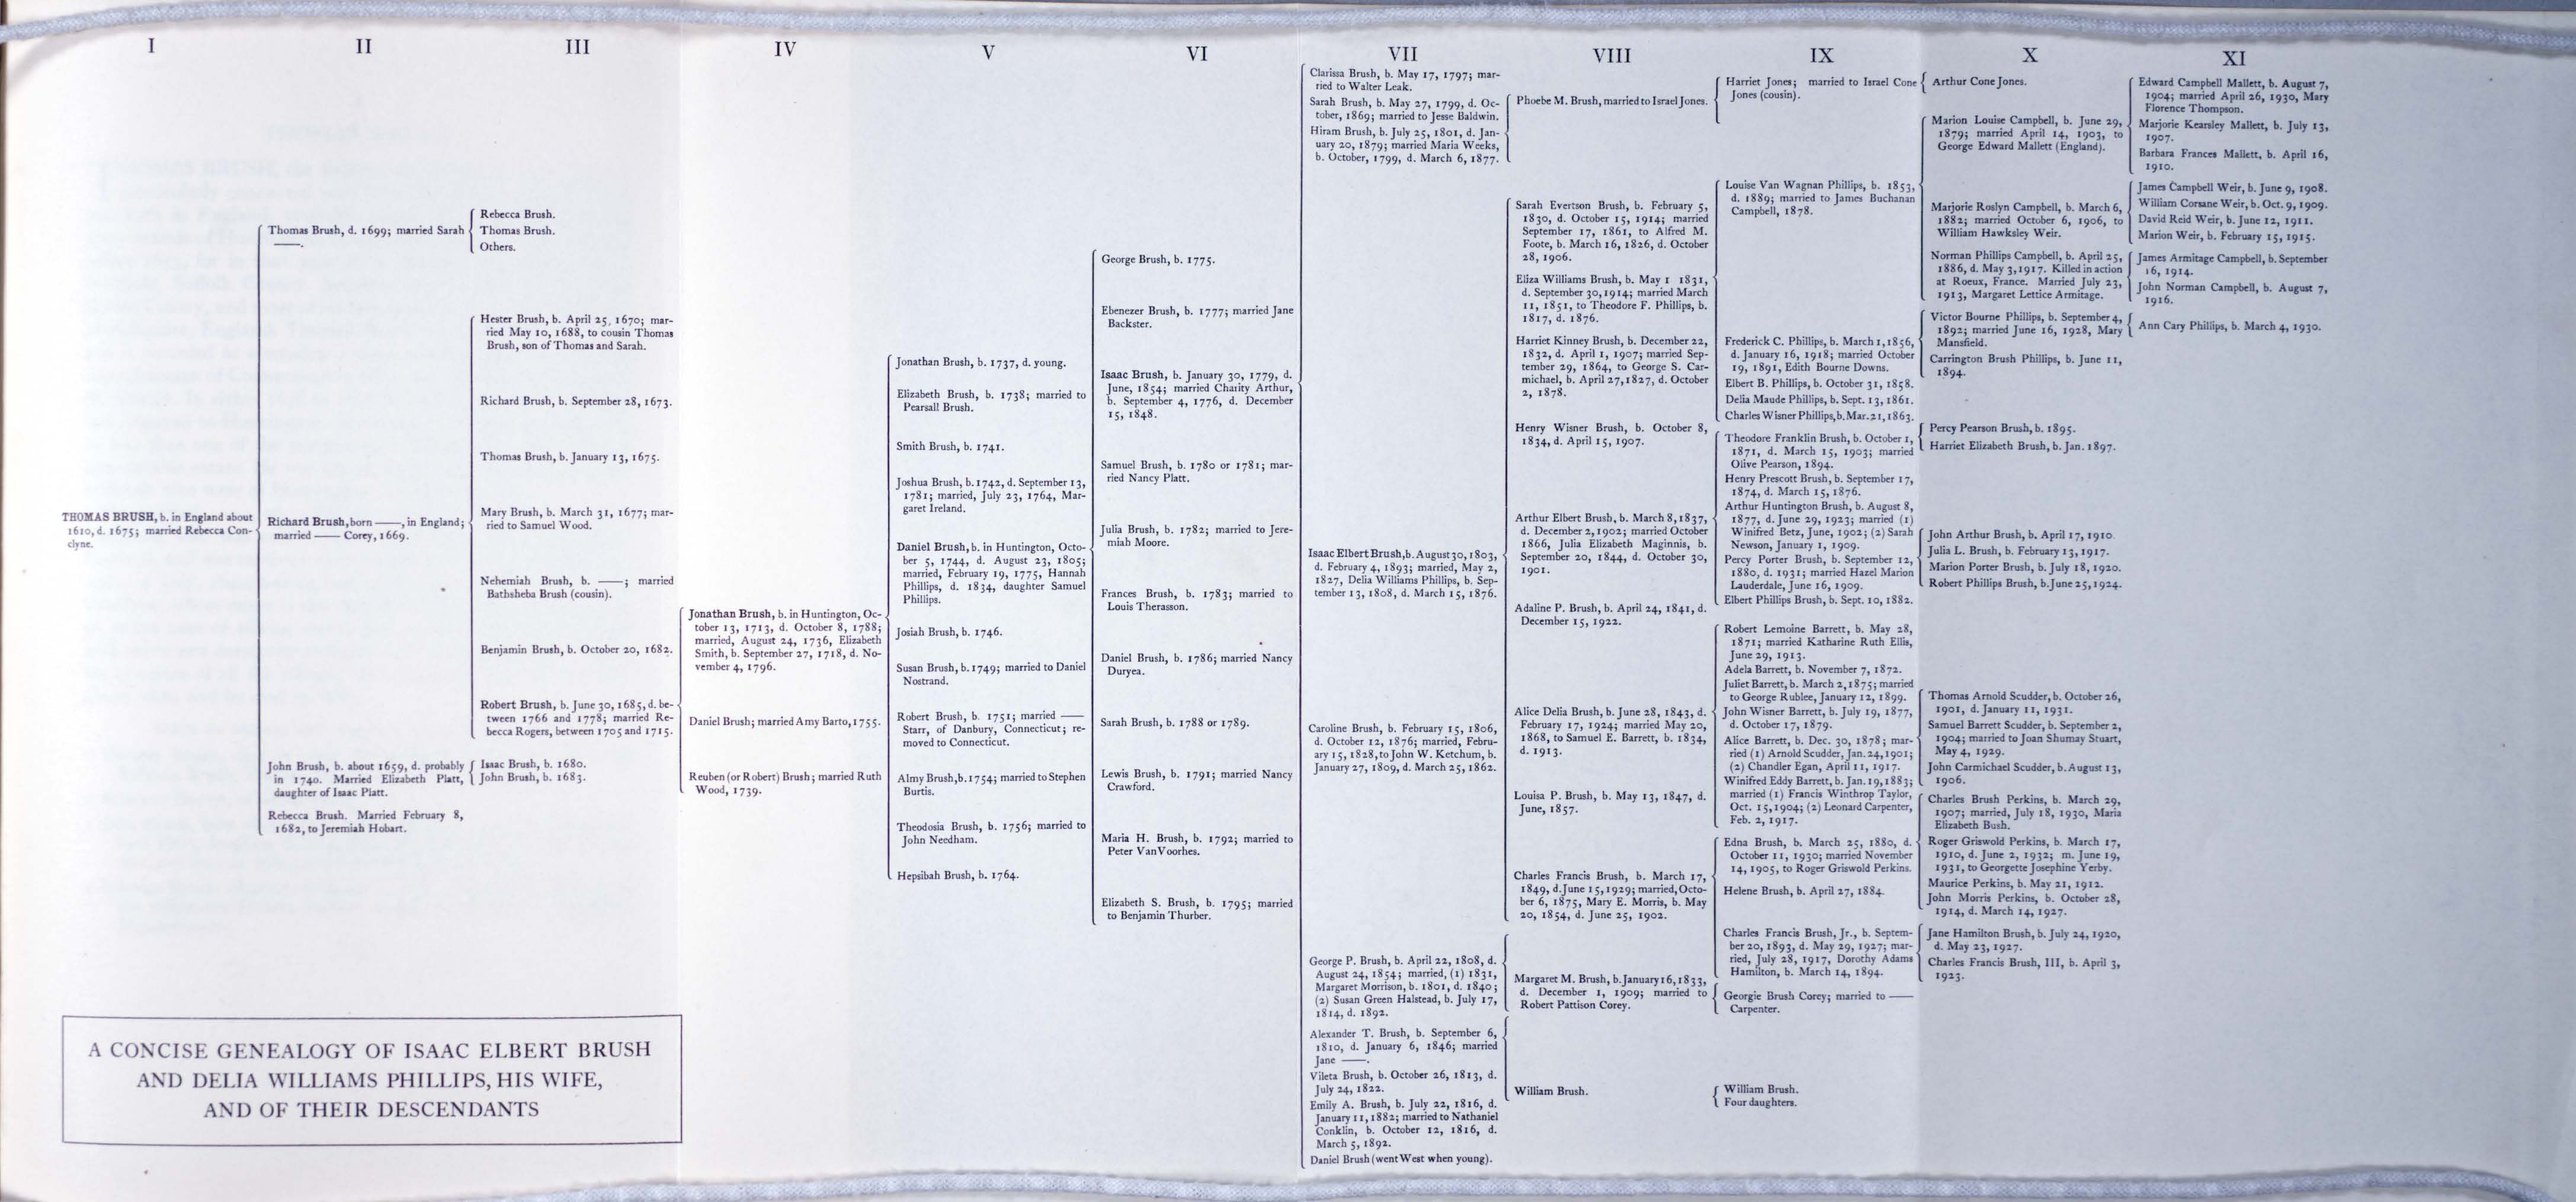 Family tree chart of Isaac Elbert Brush